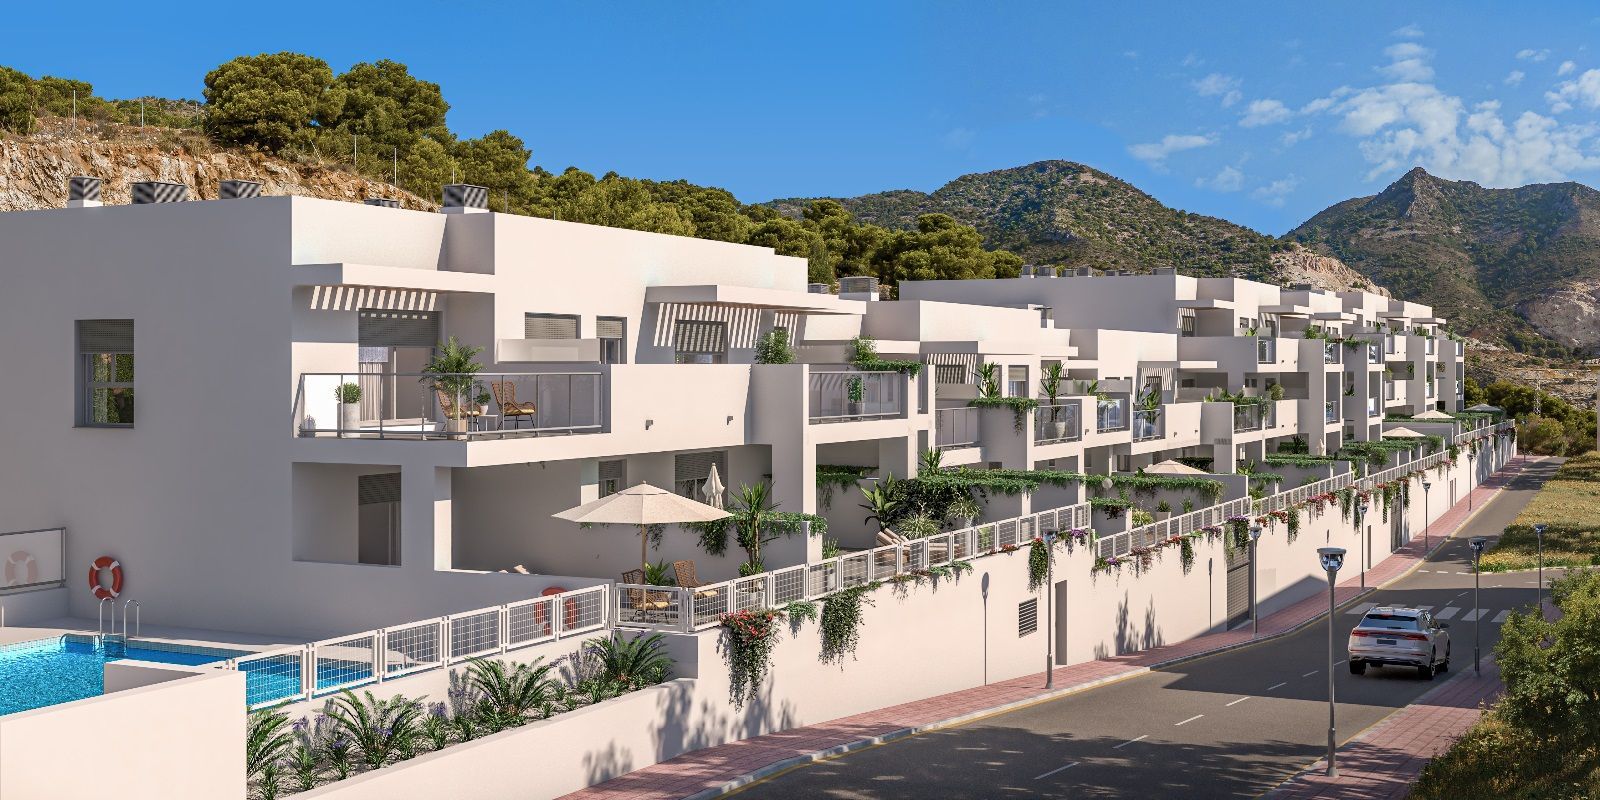 Newly built flats with sea view in Benalmadena Pueblo, Malaga, Spain